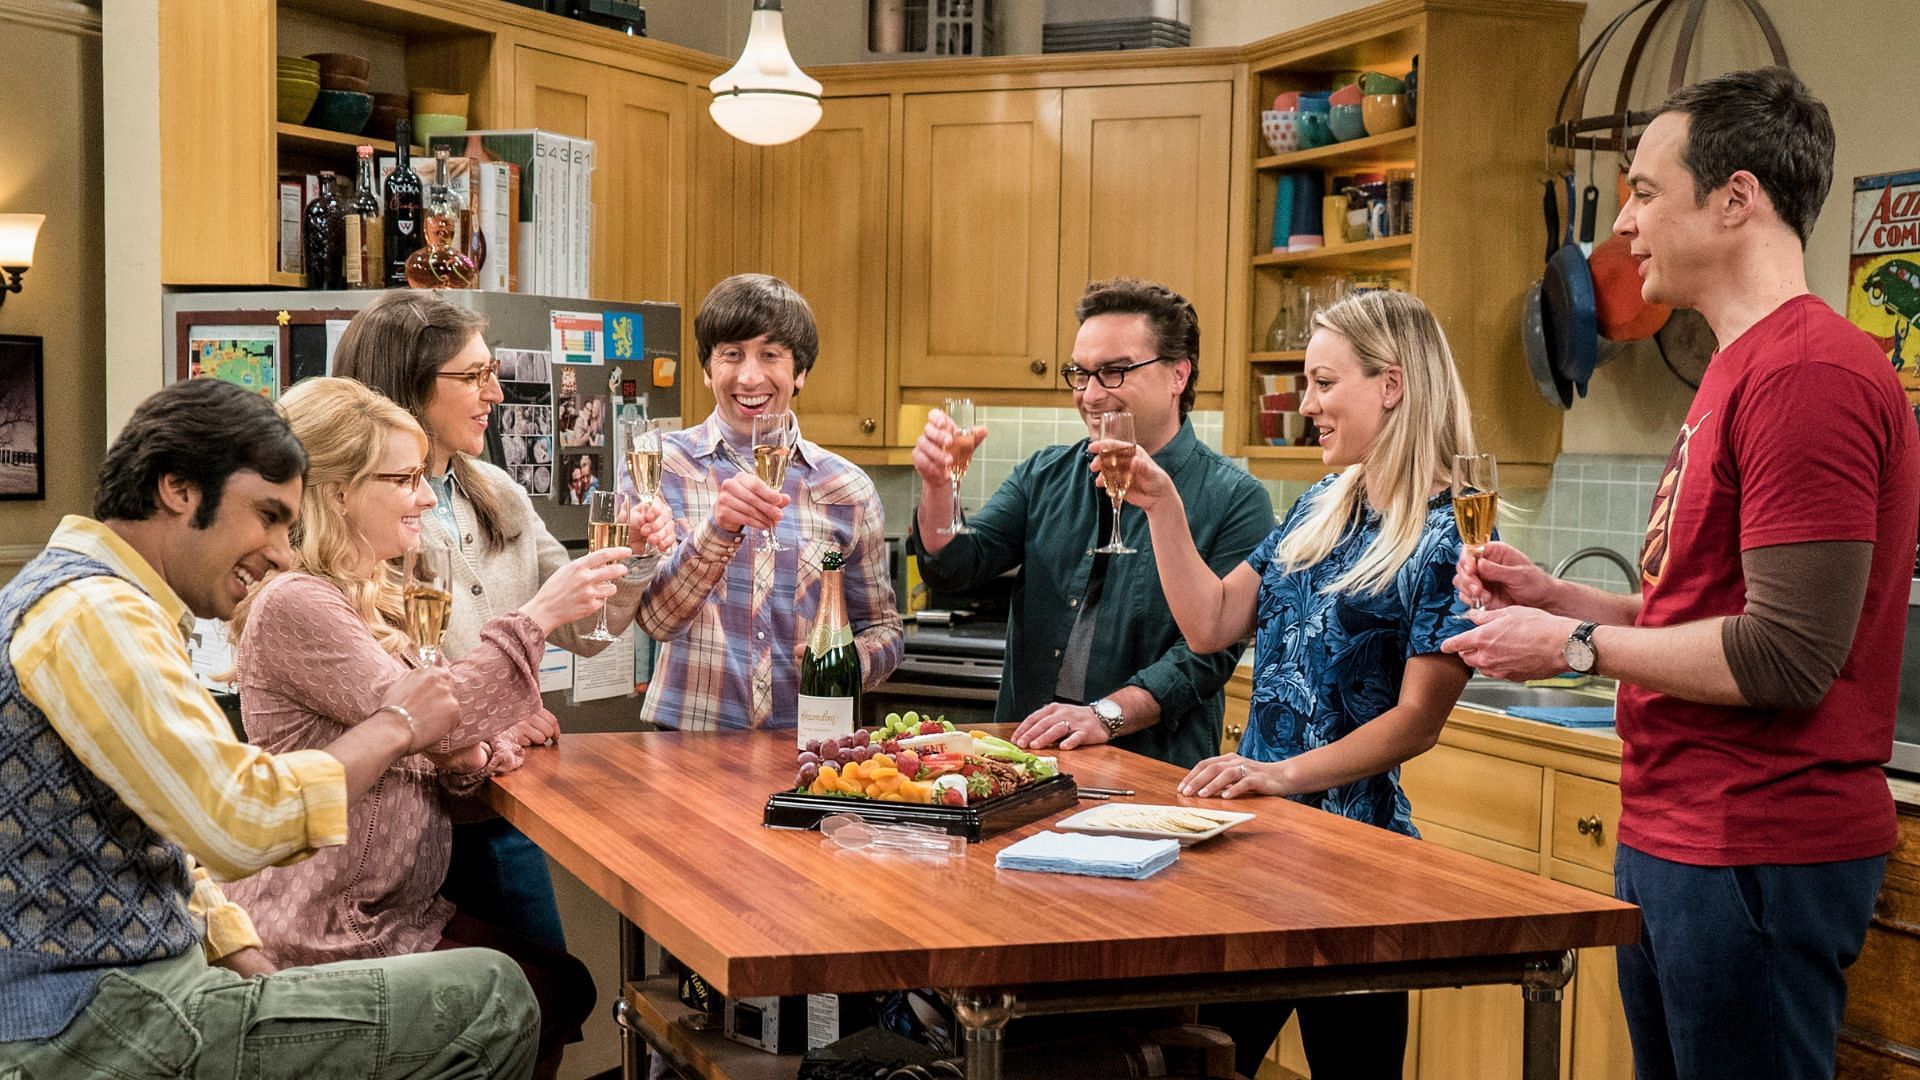 Cast Of The Big Bang Theory (Image Via The Big Bang Theory)